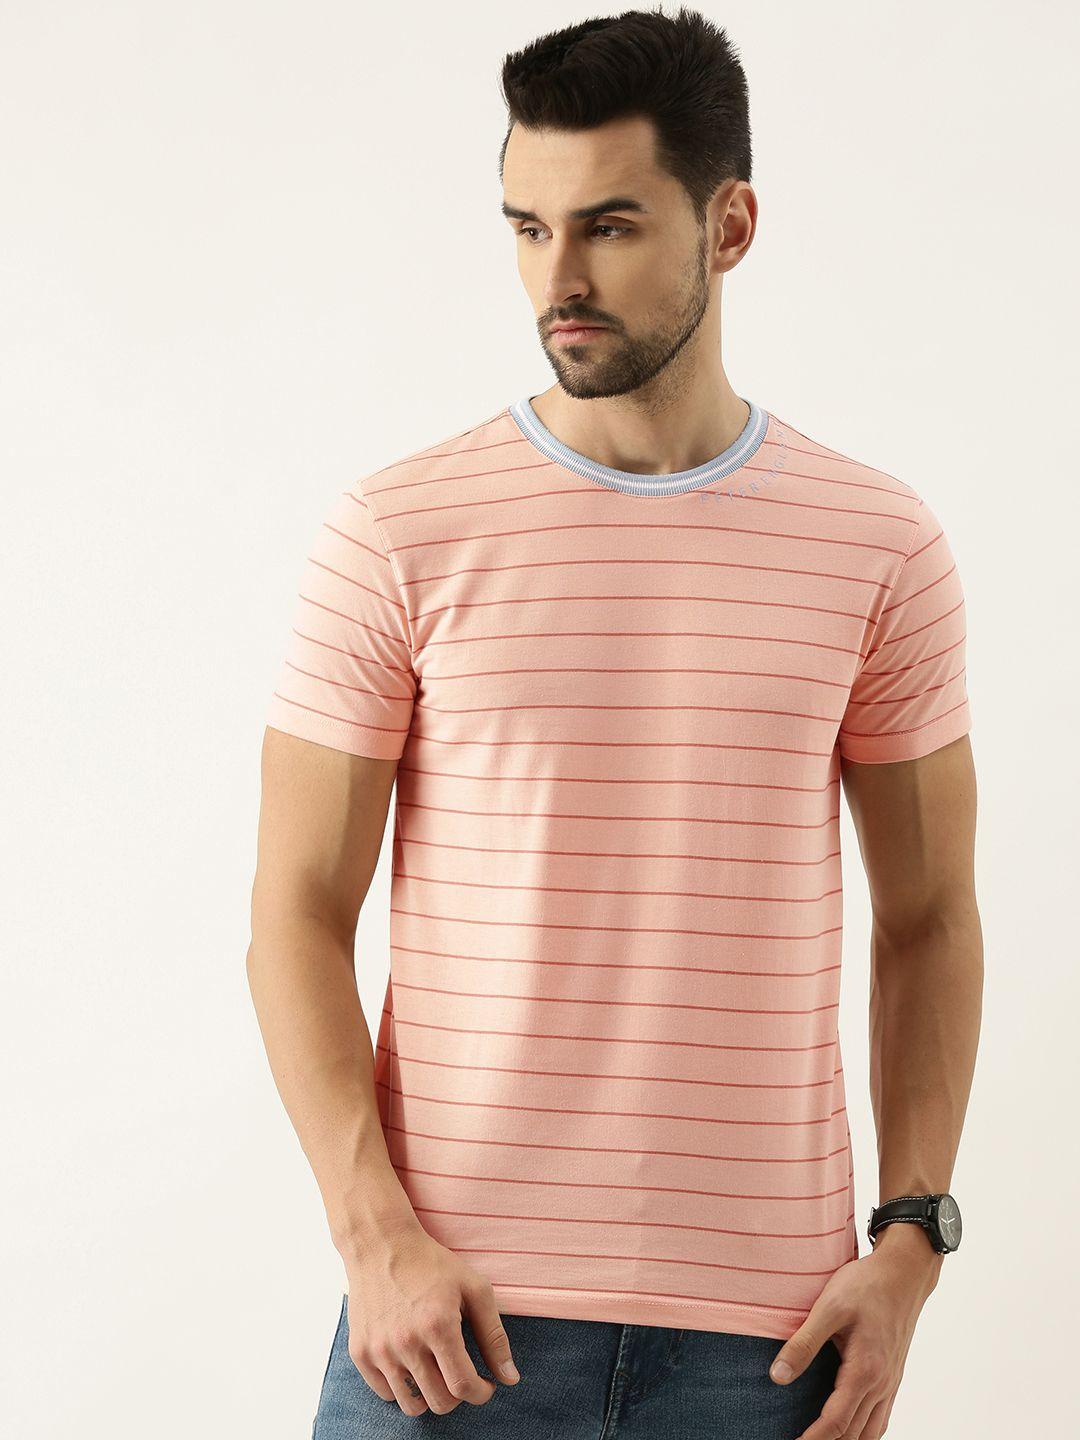 peter england casuals men pink striped t-shirt